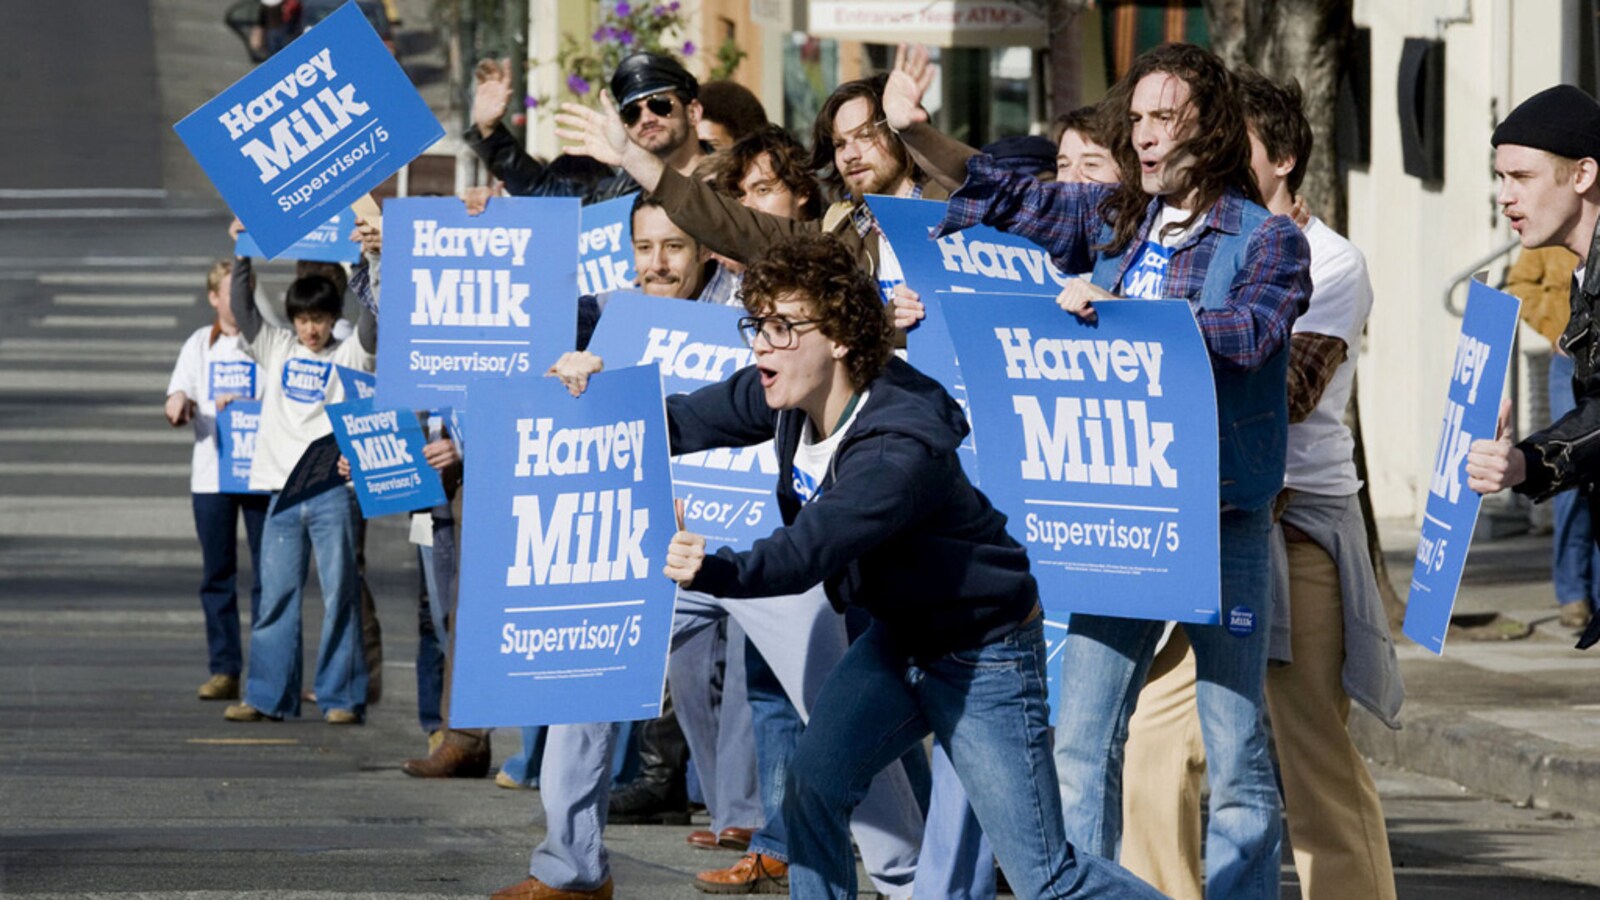 milk-2008